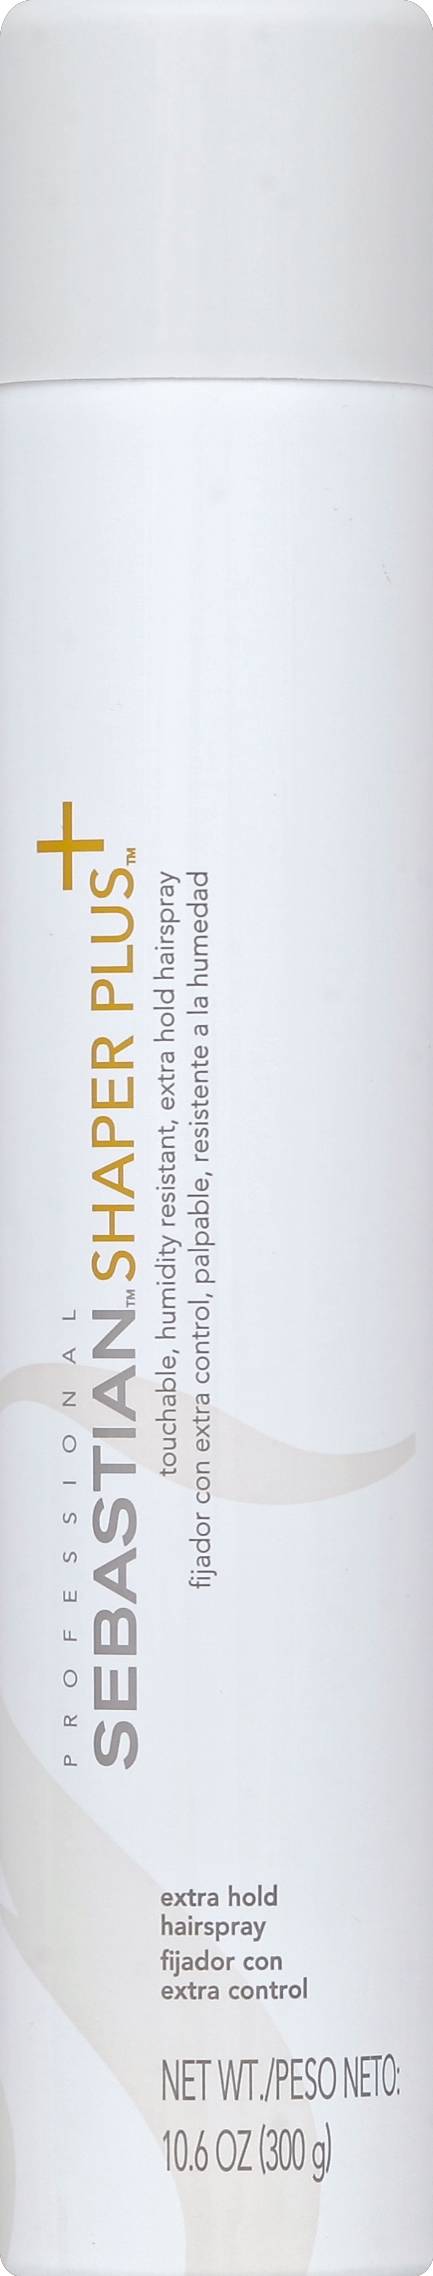 Sebastian Shaper Plus Extra Hold Styling Hairspray